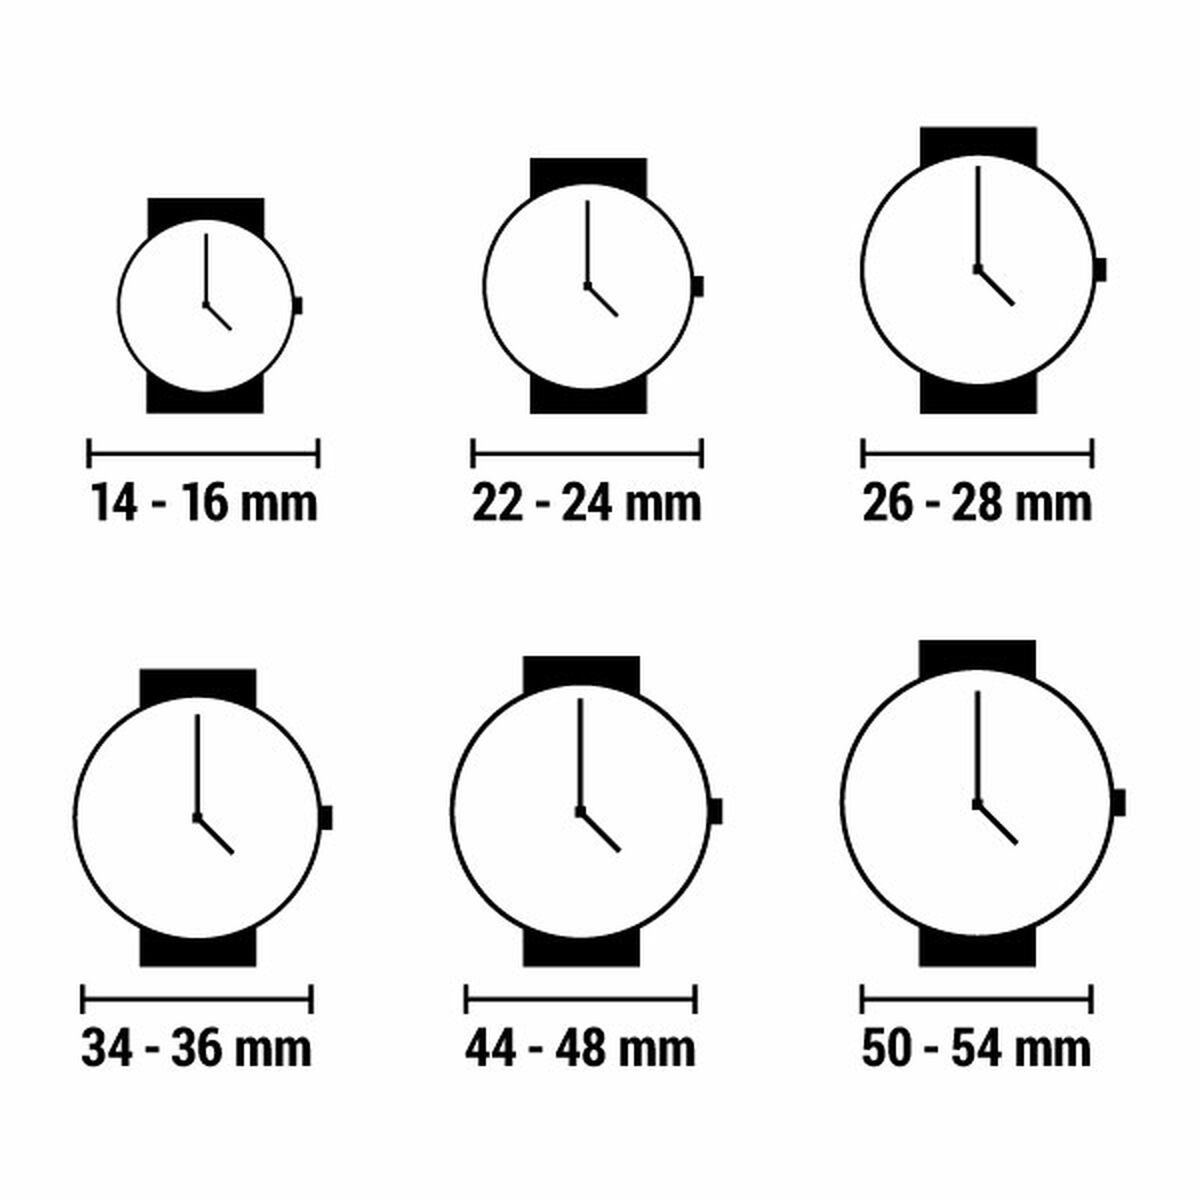 Horloge Dames Casio G-Shock GMA-S2100MD-7AER